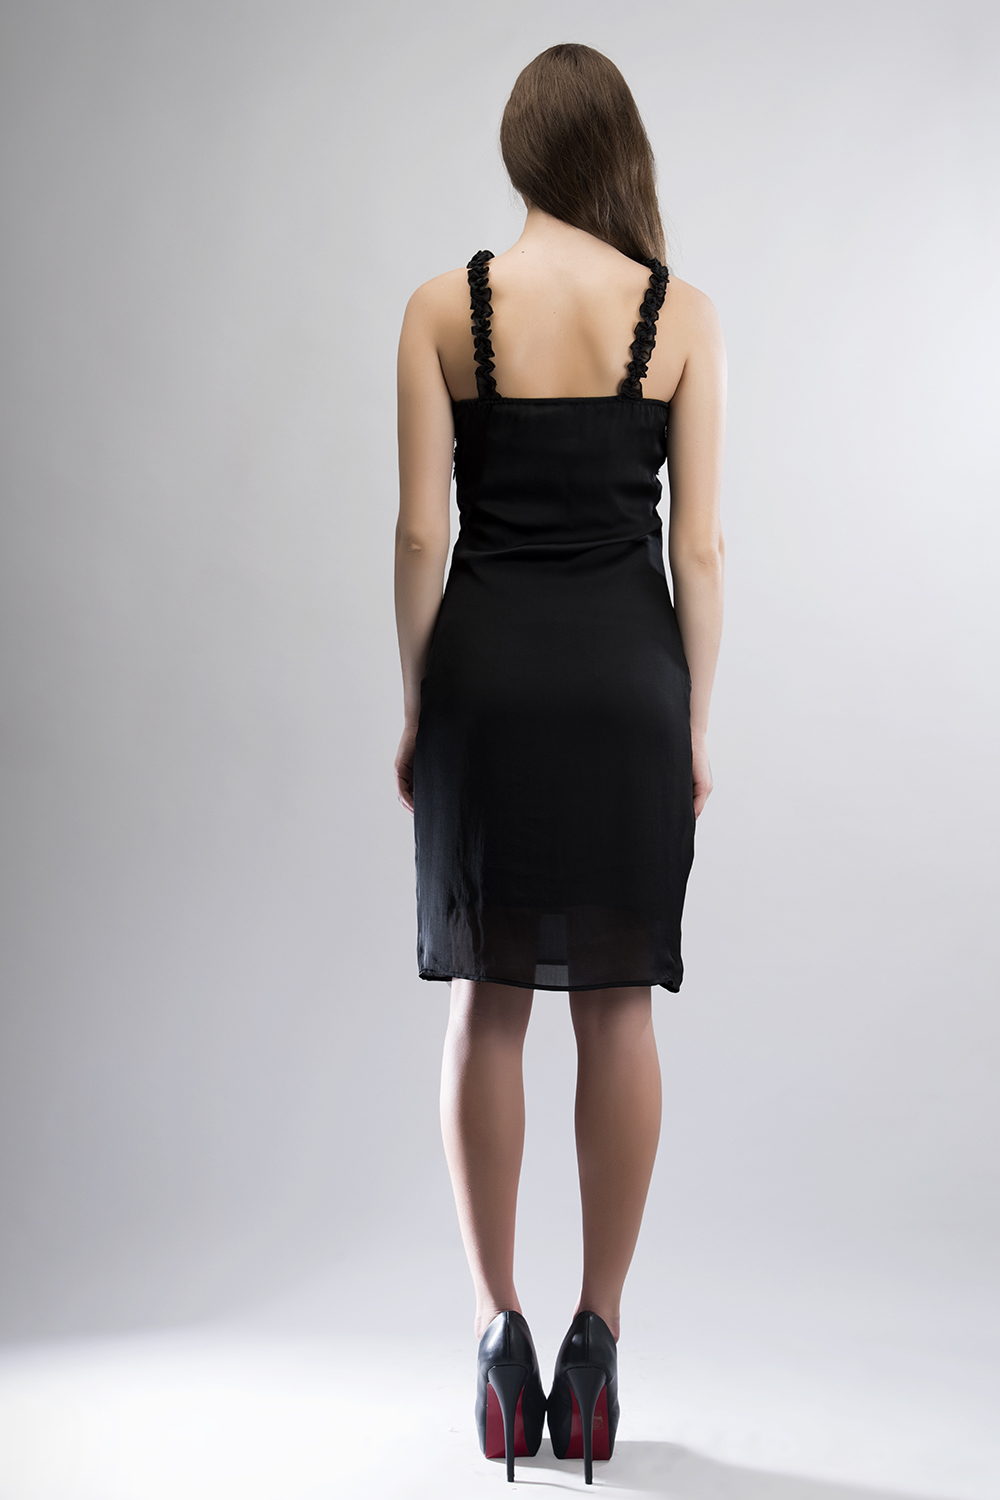 Sequin Black Short Dress -1